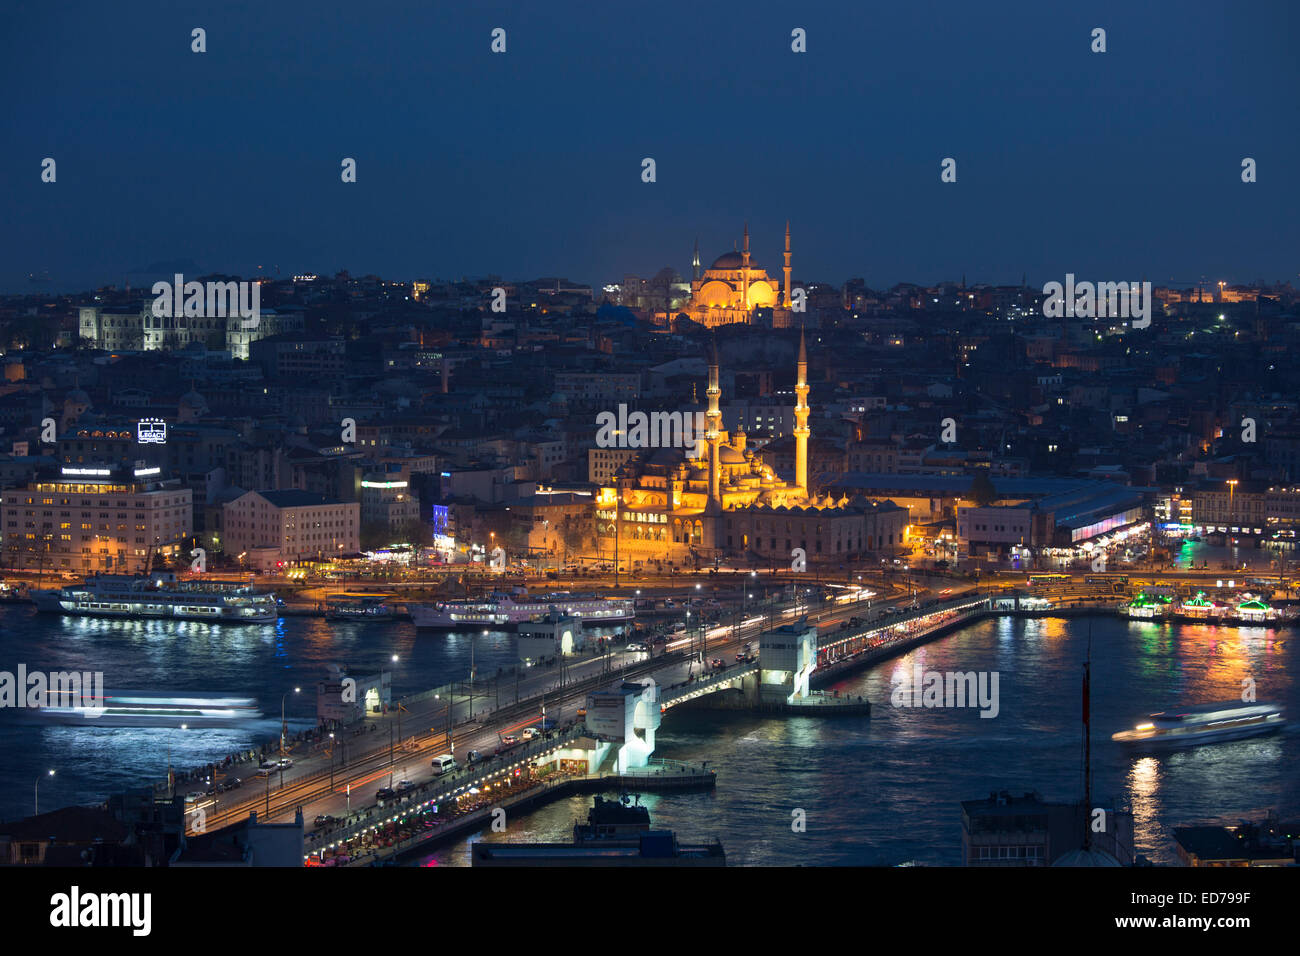 City scene Yeni Camii great mosque by Golden Horn of Bosphorus River, Topkapi Palace, Hagia Sophia Istanbul, Republic of Turkey Stock Photo